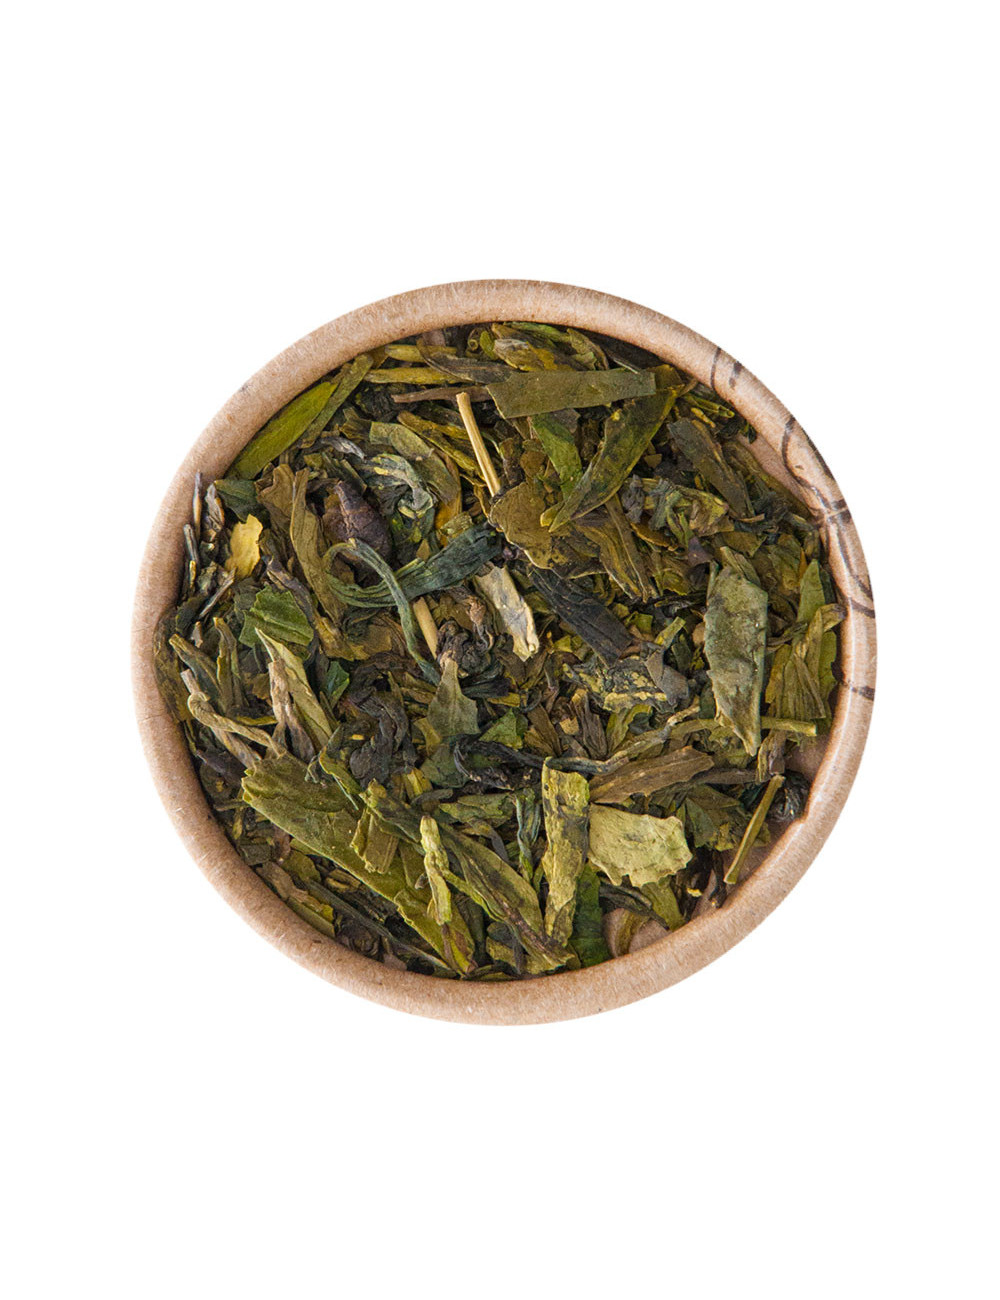 Lung Ching Special tè verde - La Pianta del Tè shop online